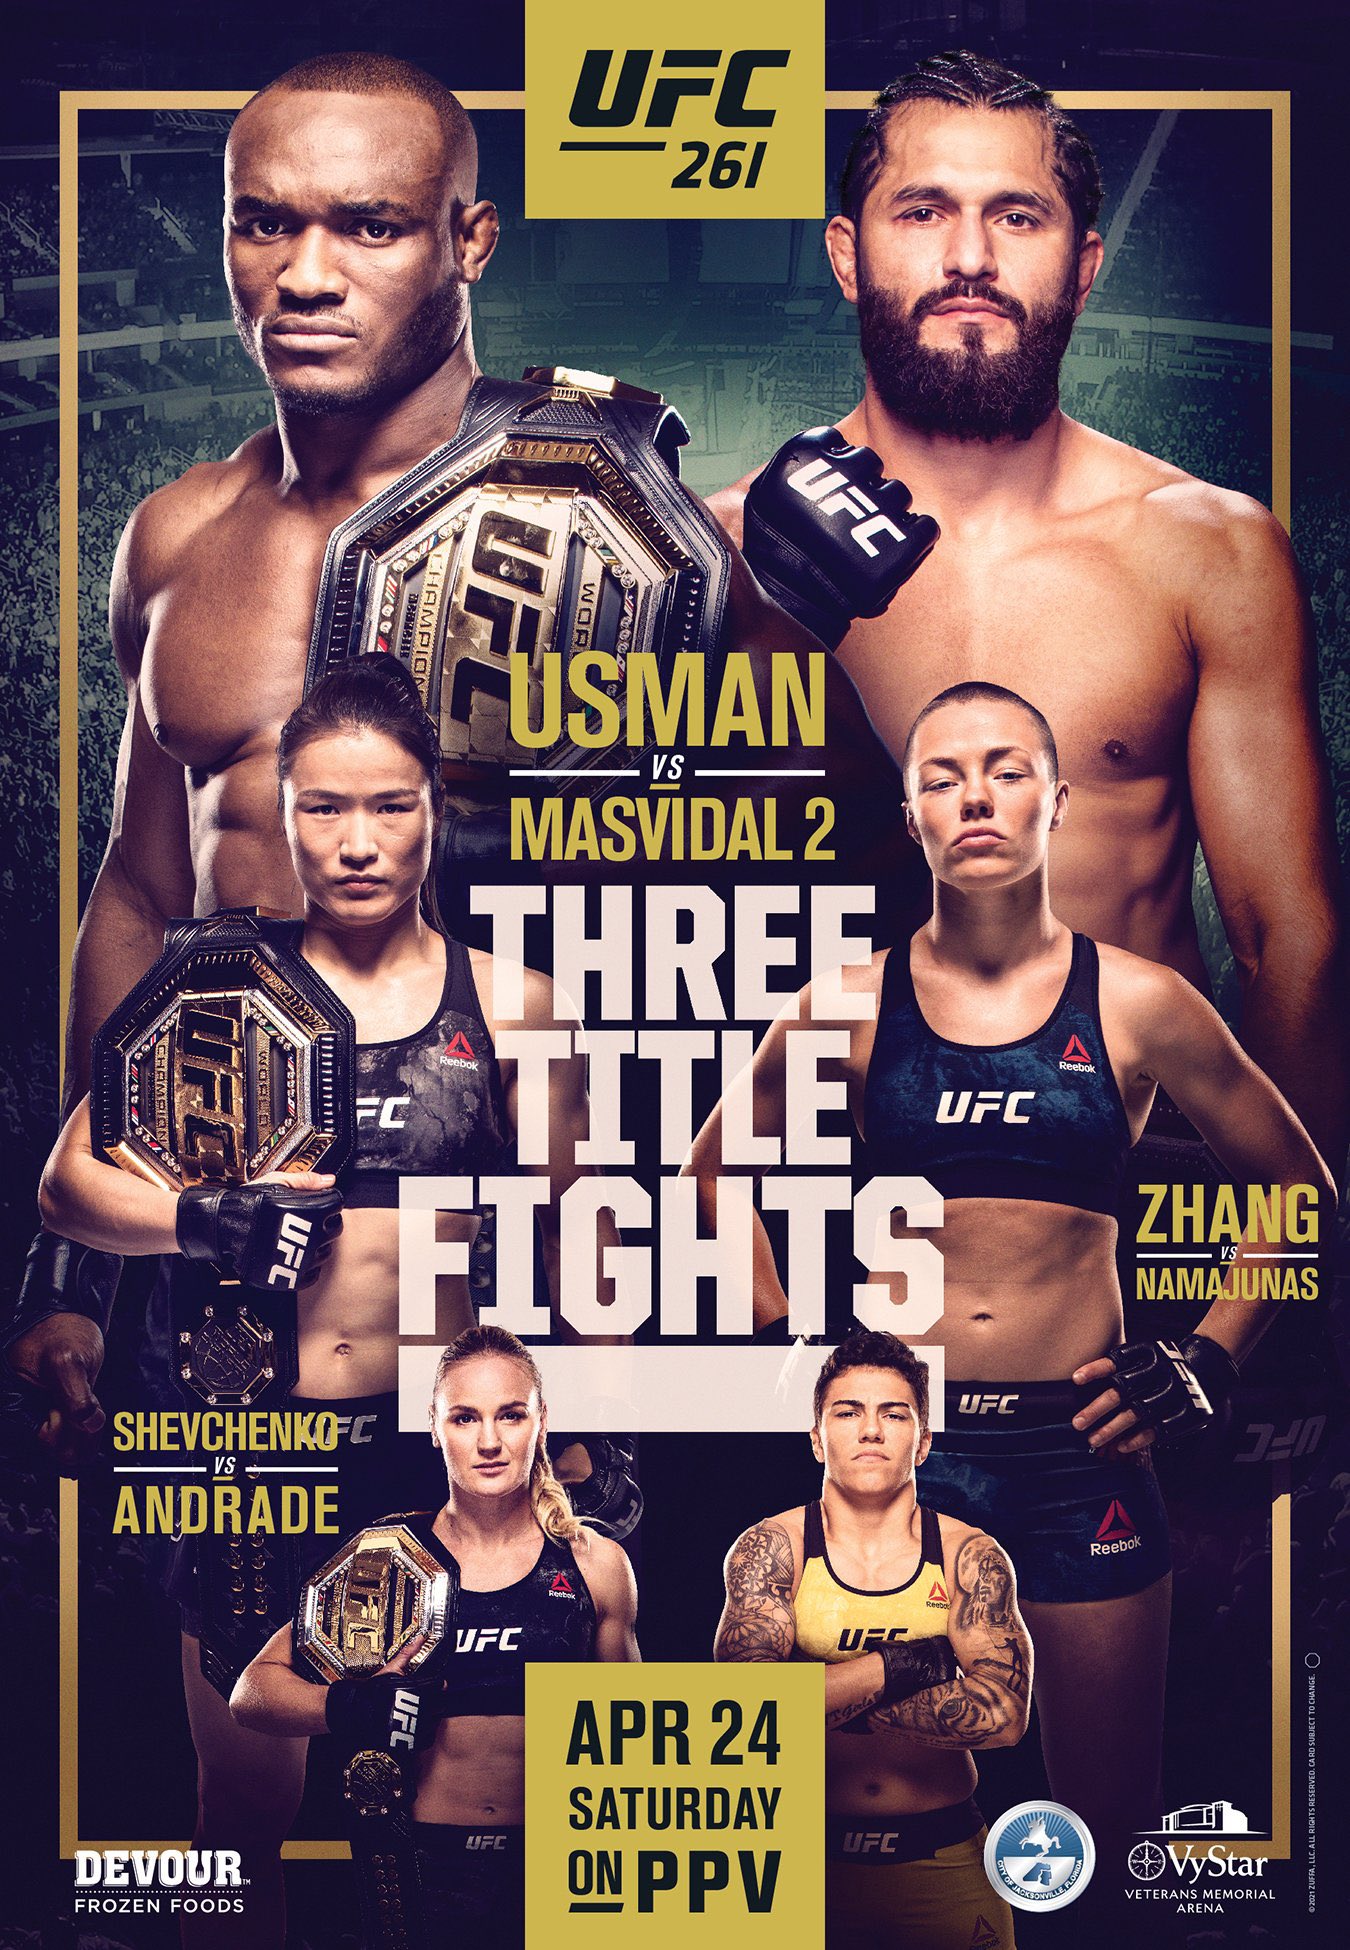 UFC 261 - Jacksonville - Poster et affiche